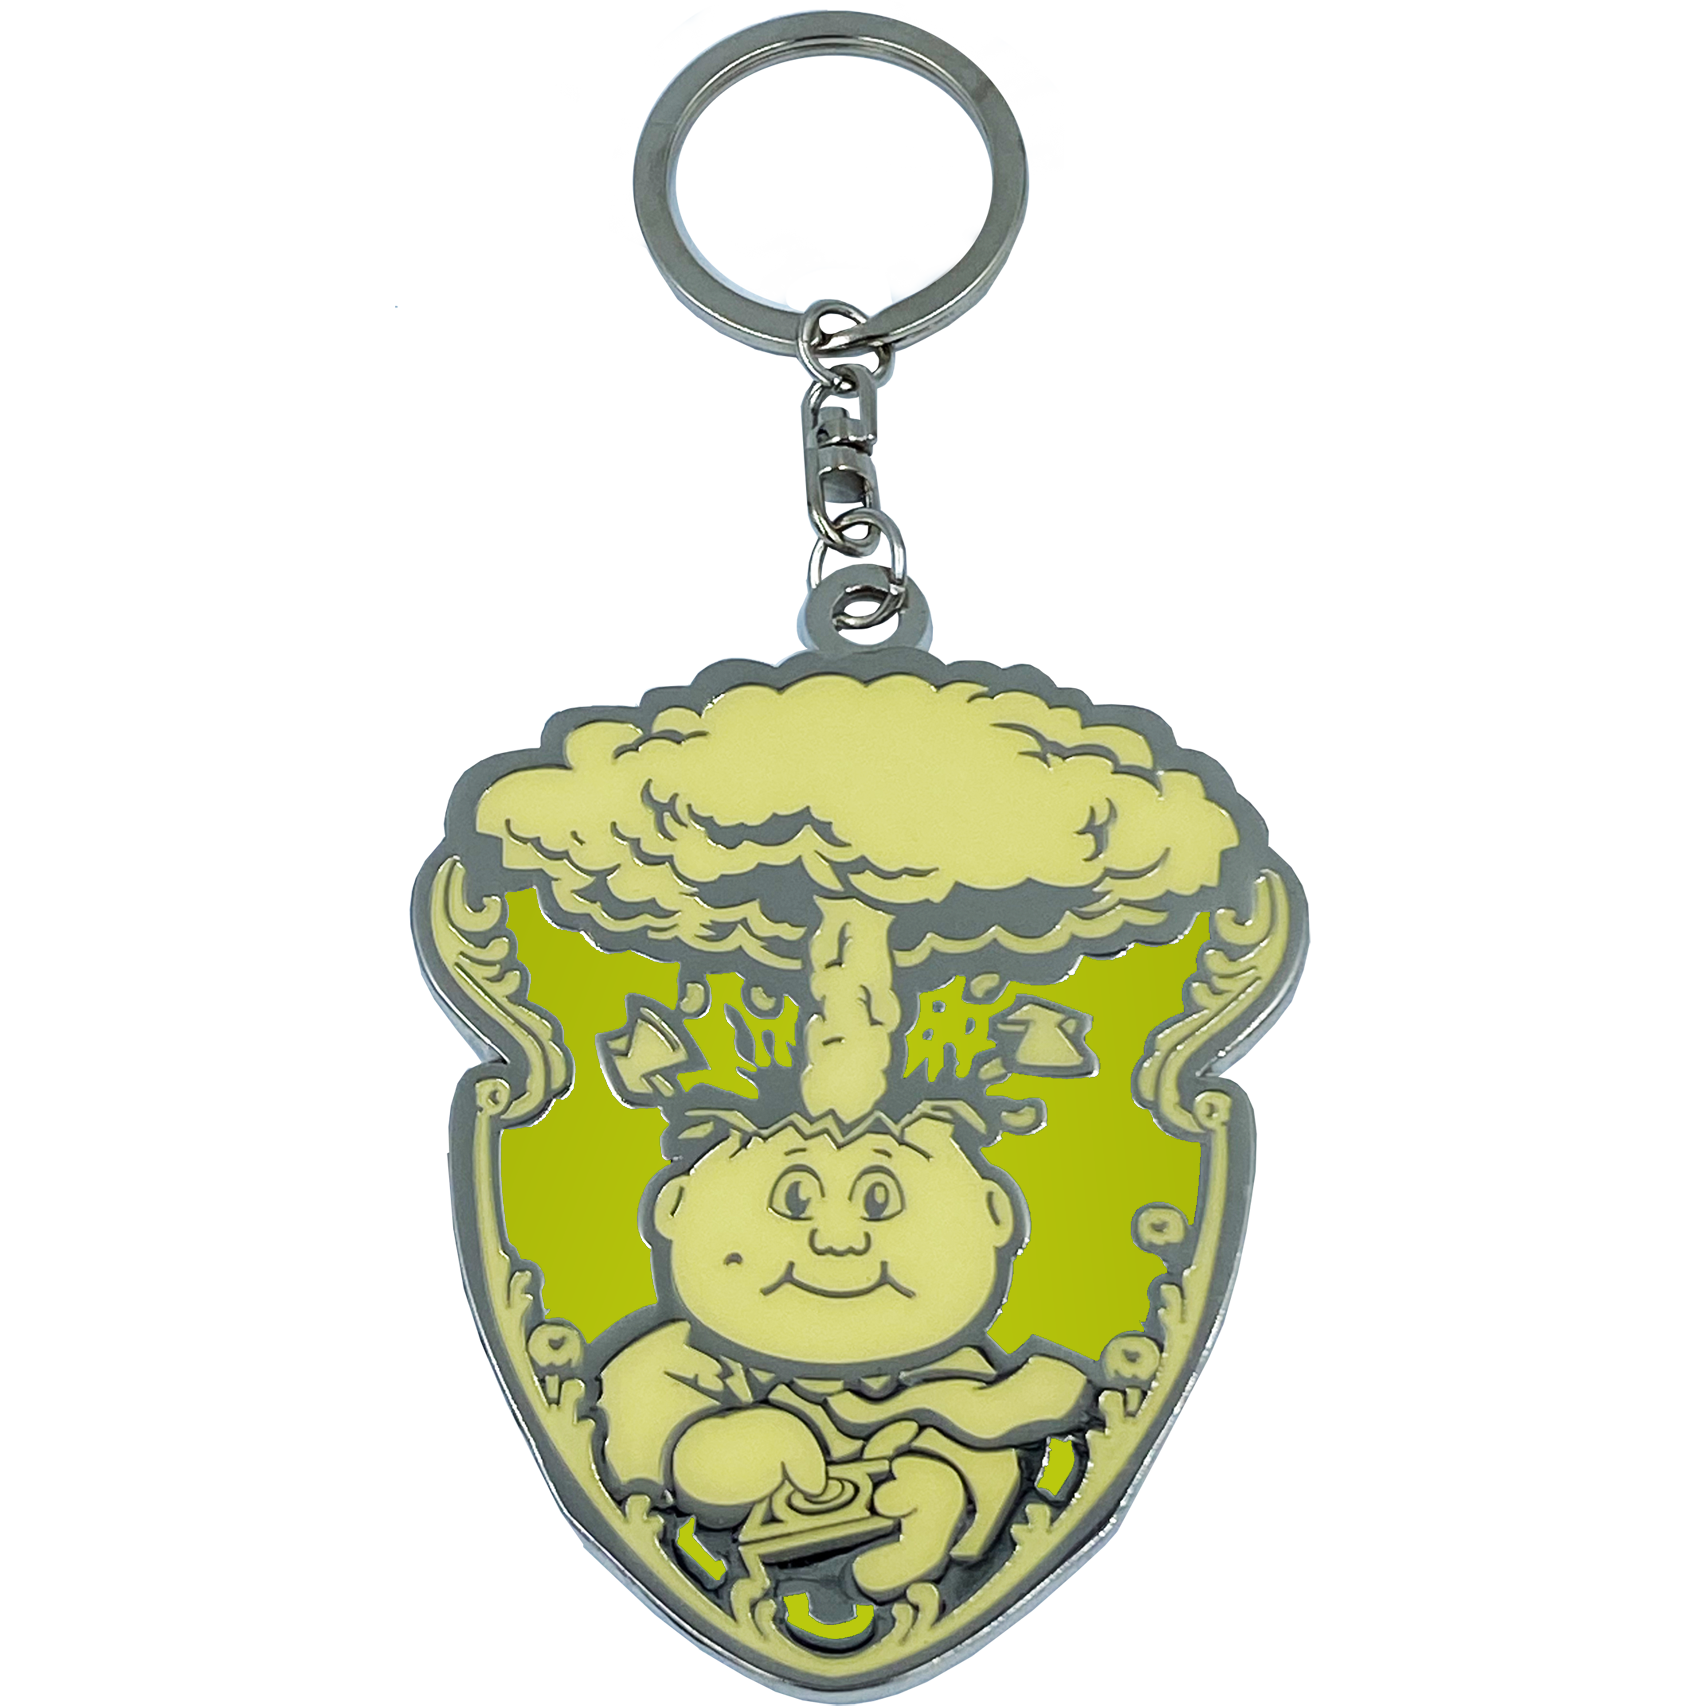 GPK-CC-004 YELLOW Adam Bomb GPK Cloisonné Ornament Emblem Keychain: only 100 made